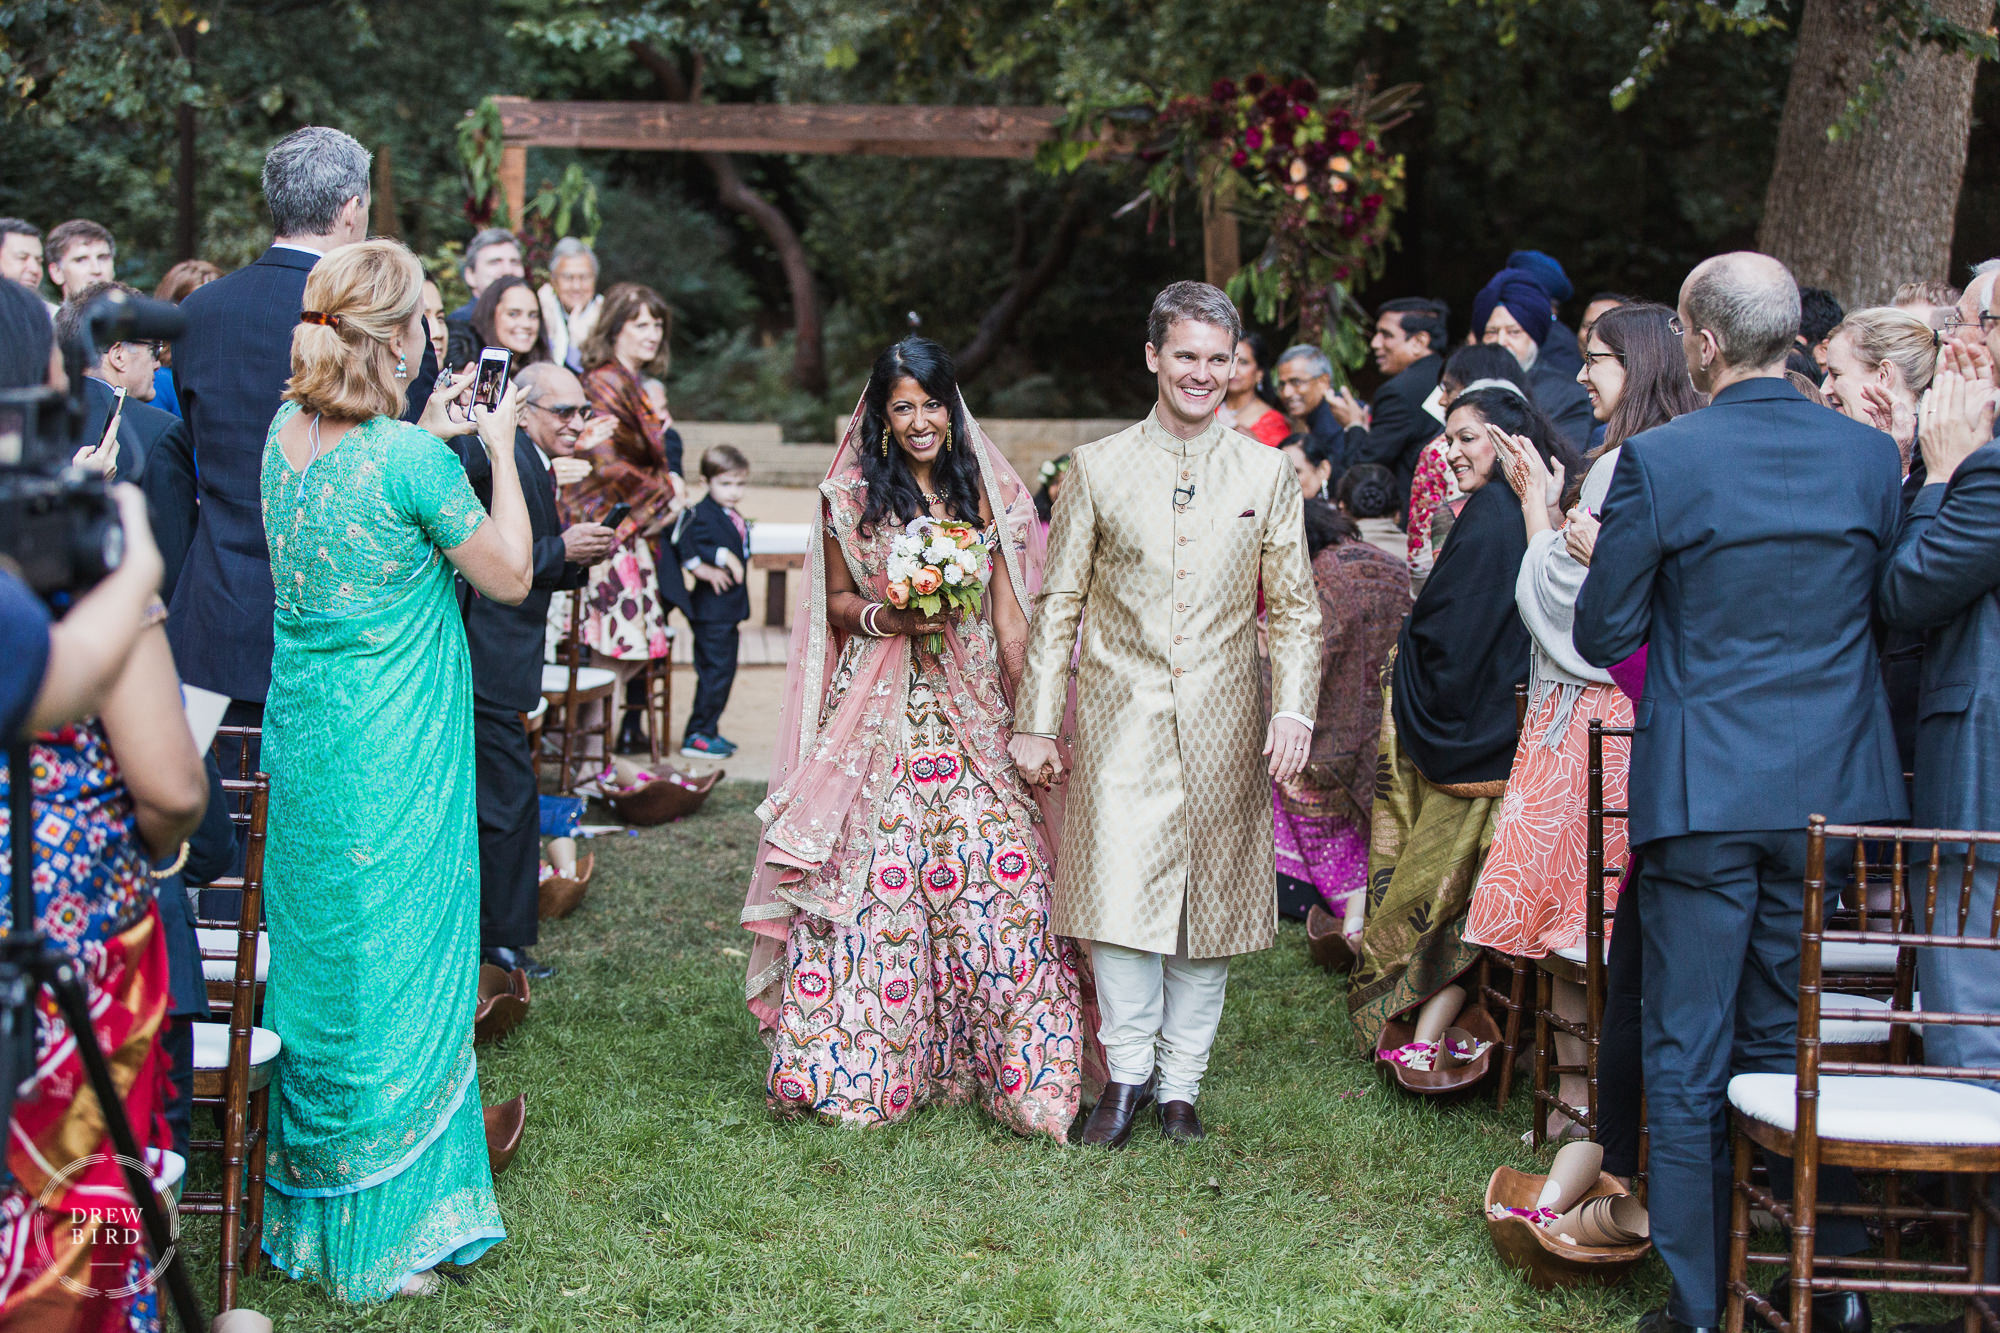 Hindu Indian wedding ceremony in the Shakespeare Garden in Golden Gate Park of the Presidio in San Francisco.